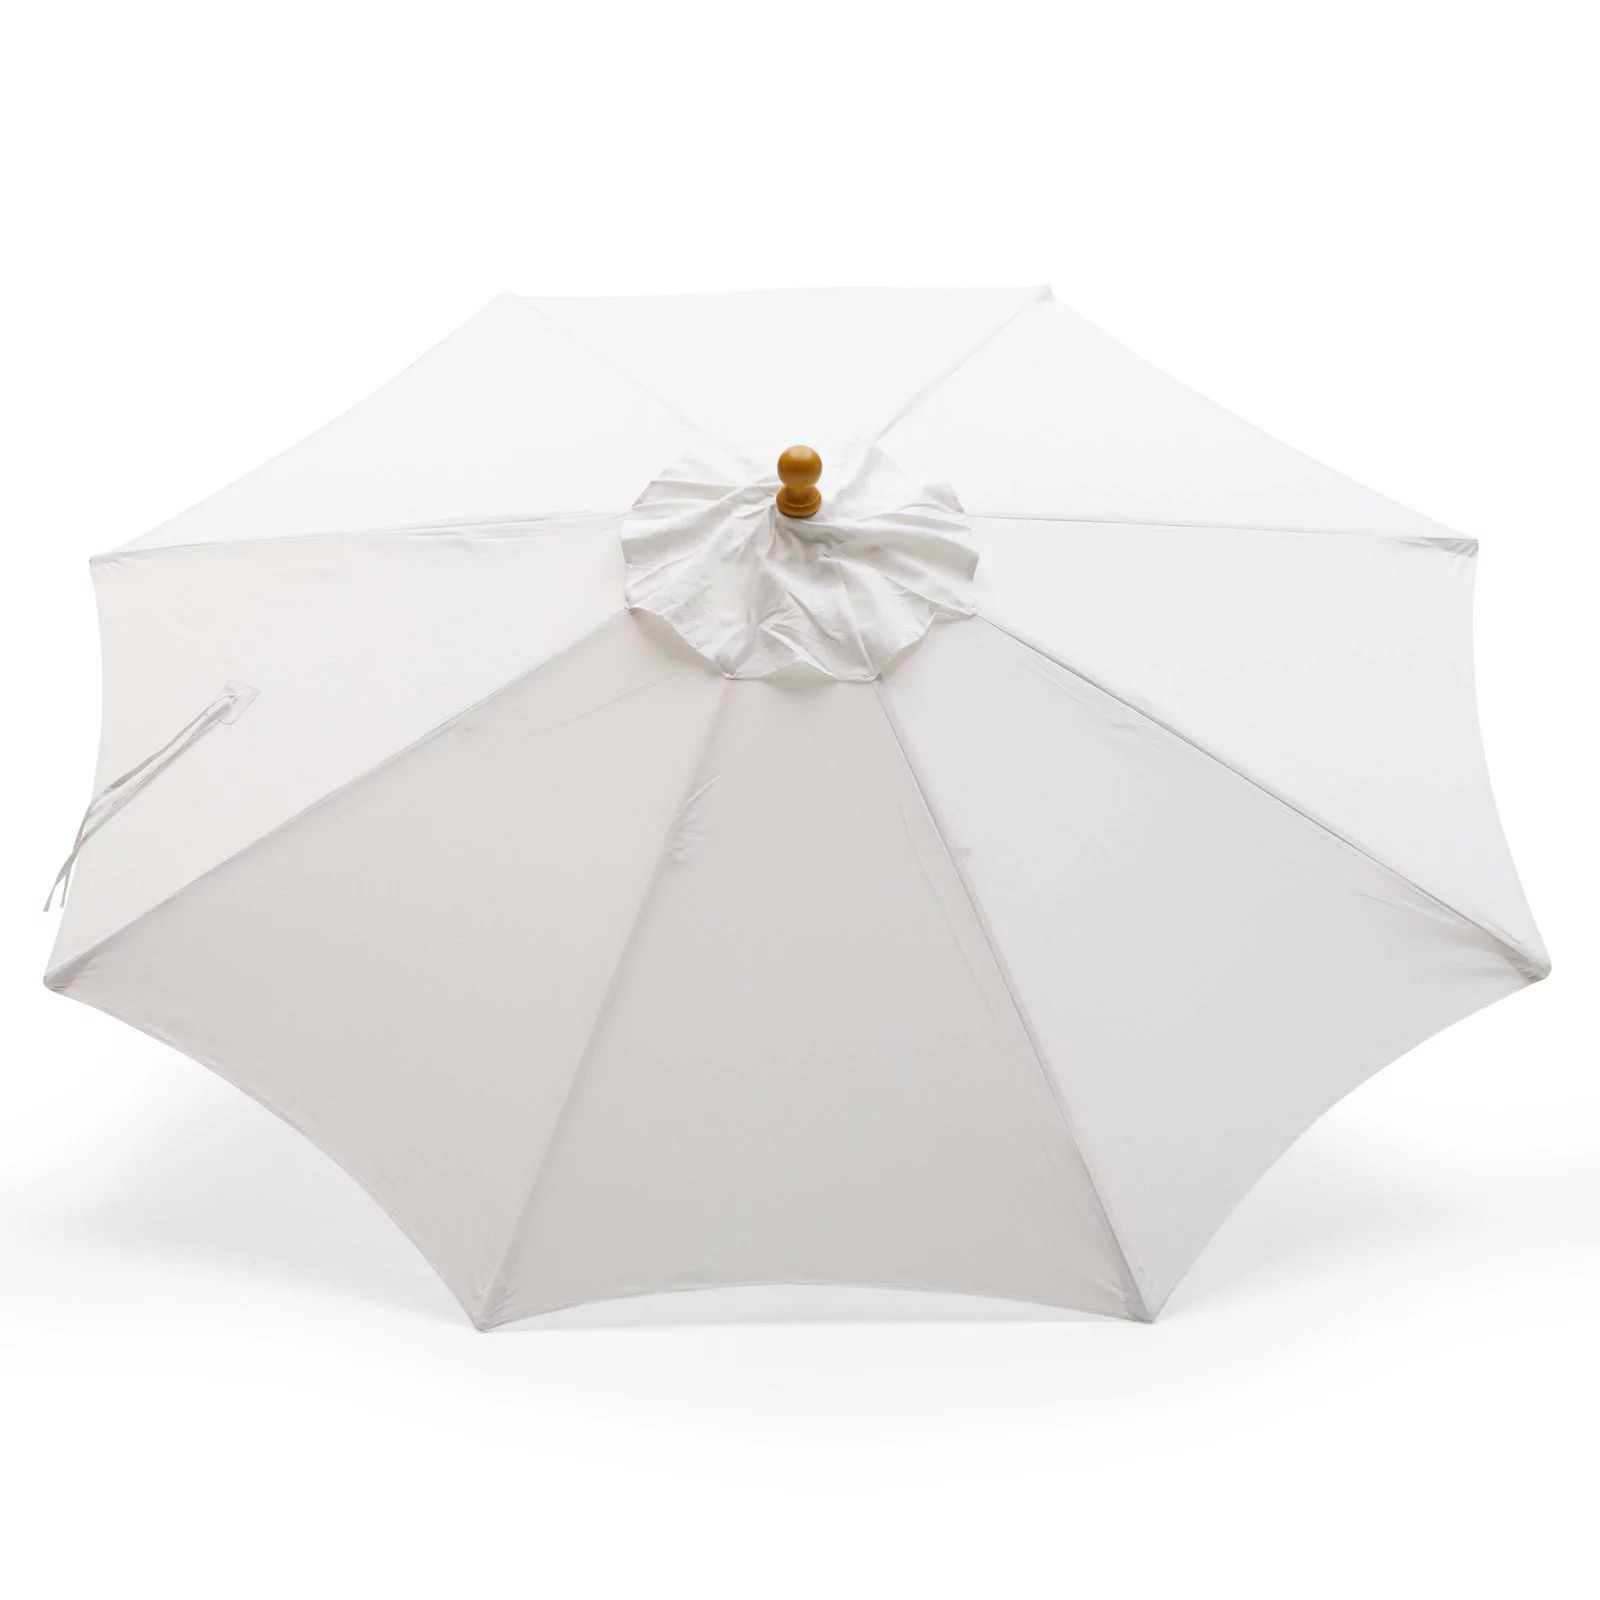 MoDRN 9 ft. Sunbrella Market Umbrella with Hardwood Frame | Walmart (US)